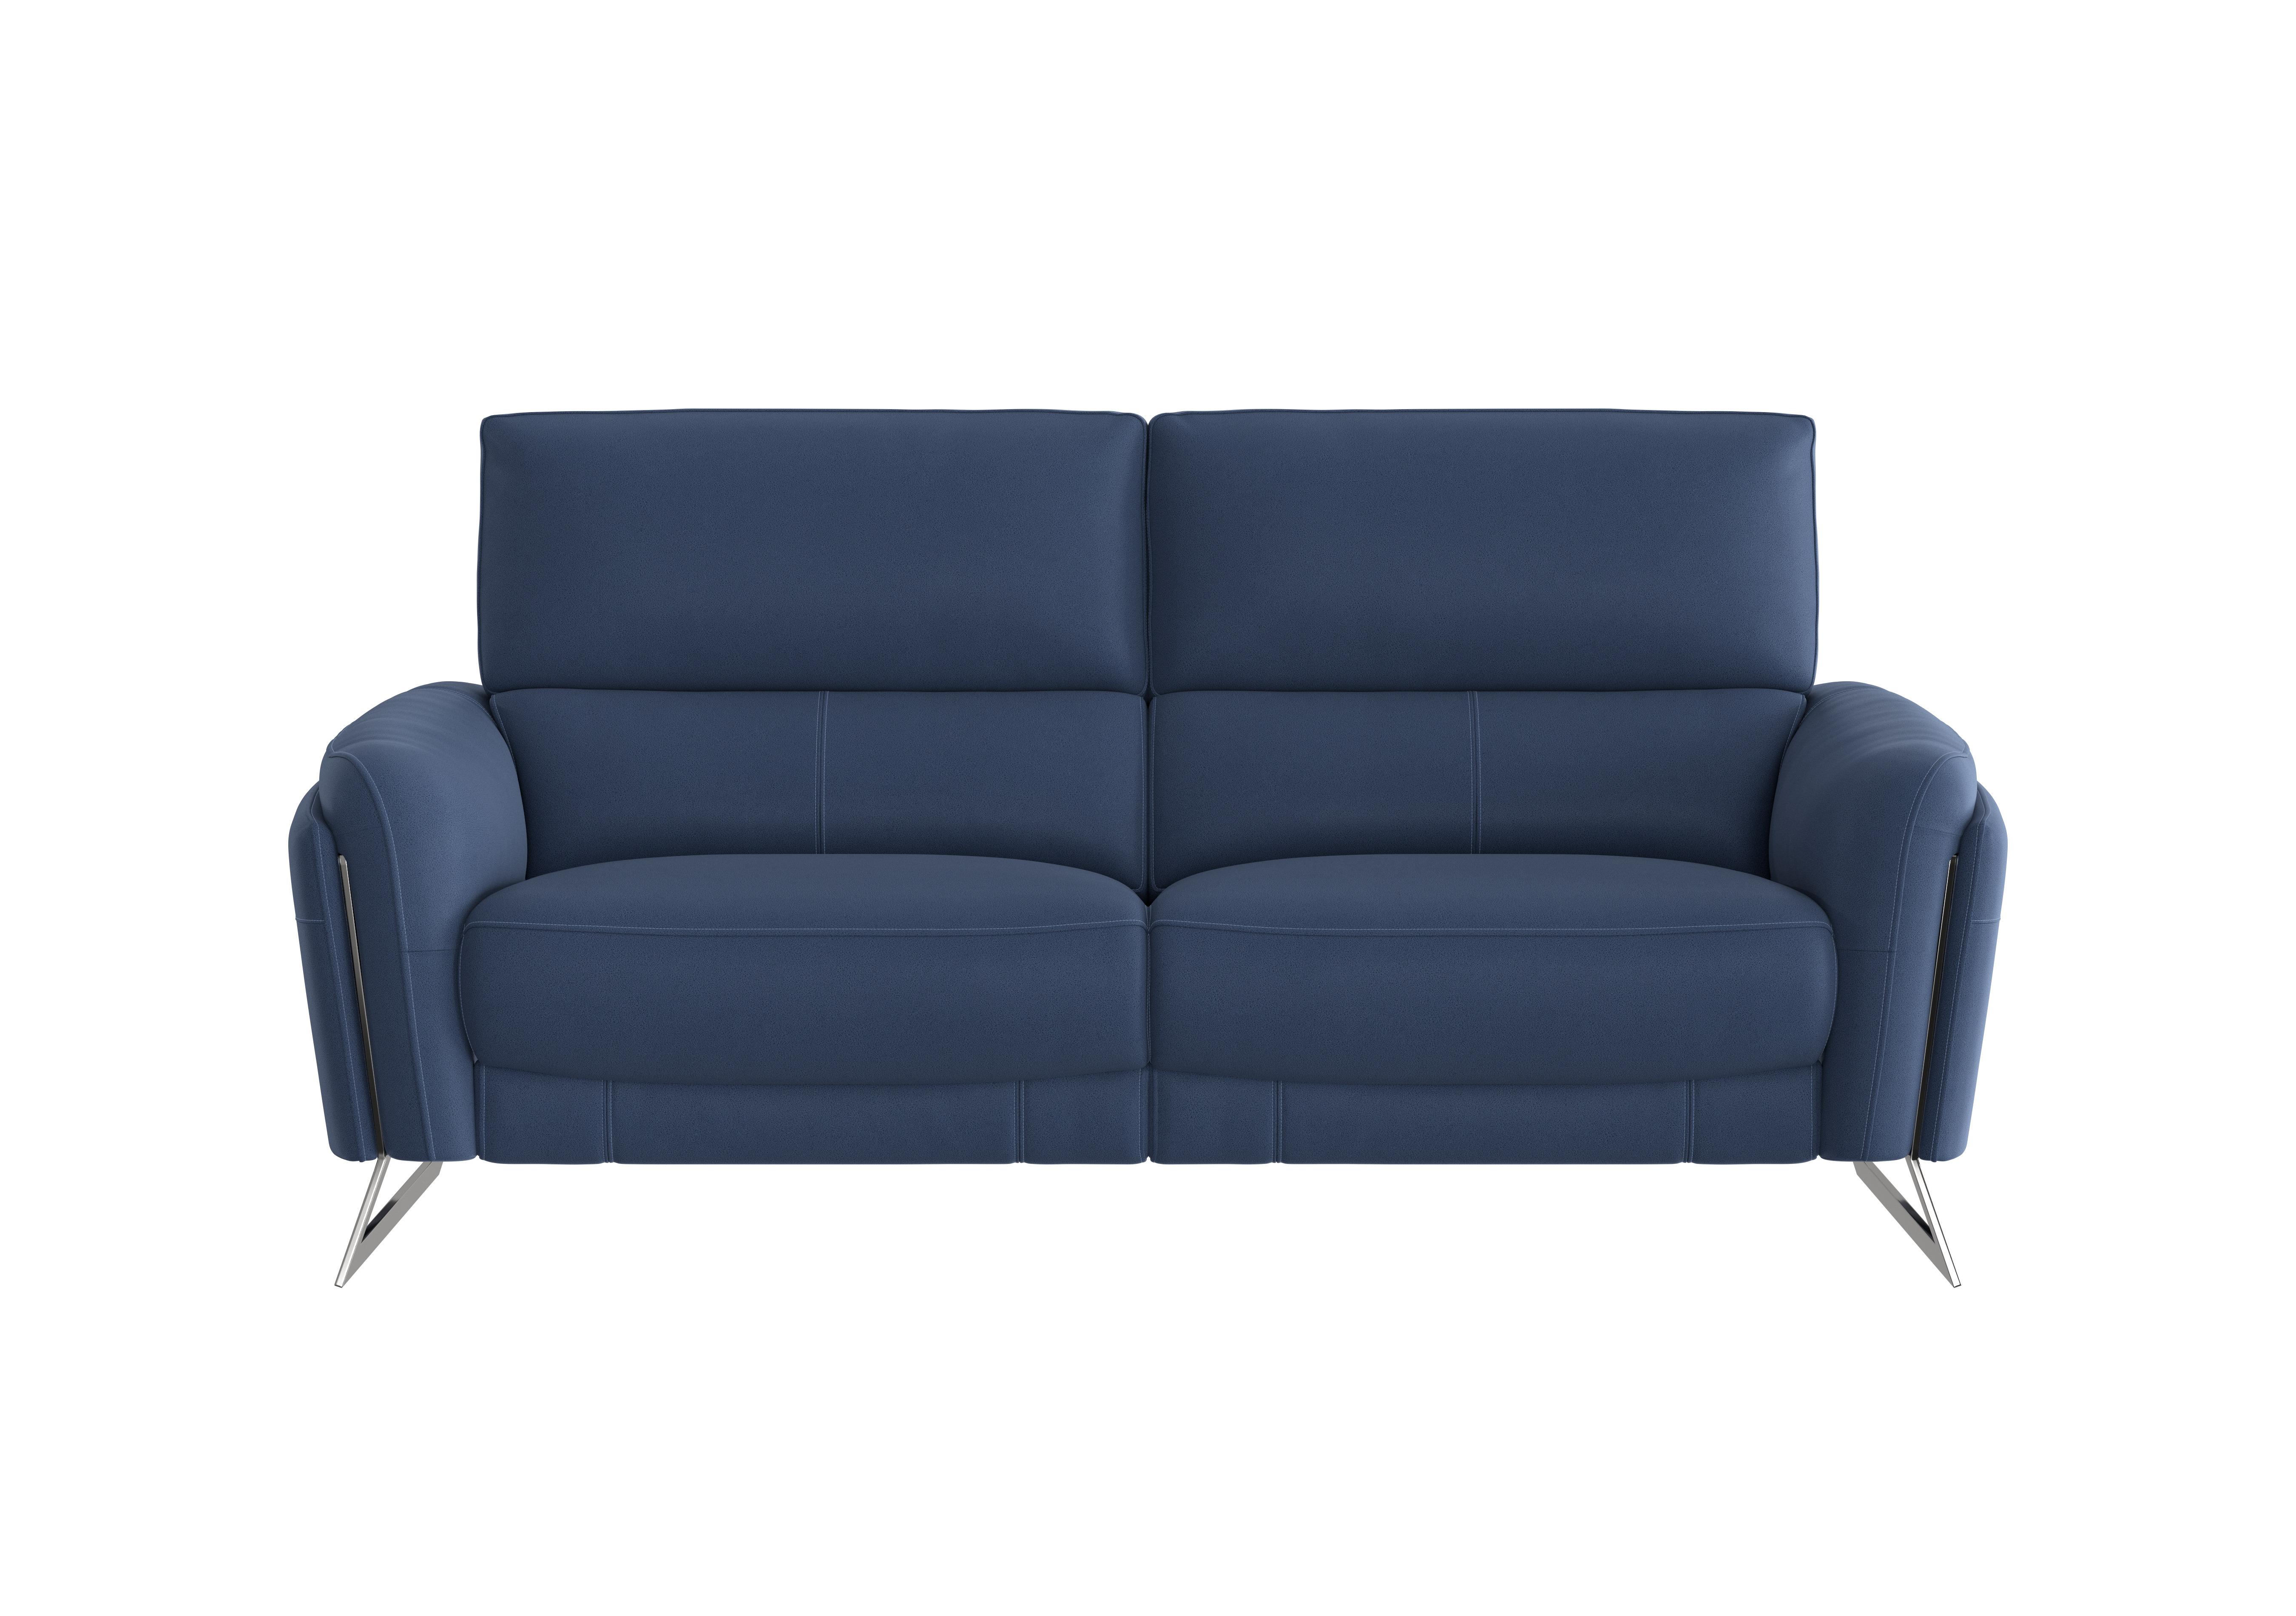 Amarilla 3 Seater Fabric Sofa in Bfa-Blj-R10 Blue on Furniture Village